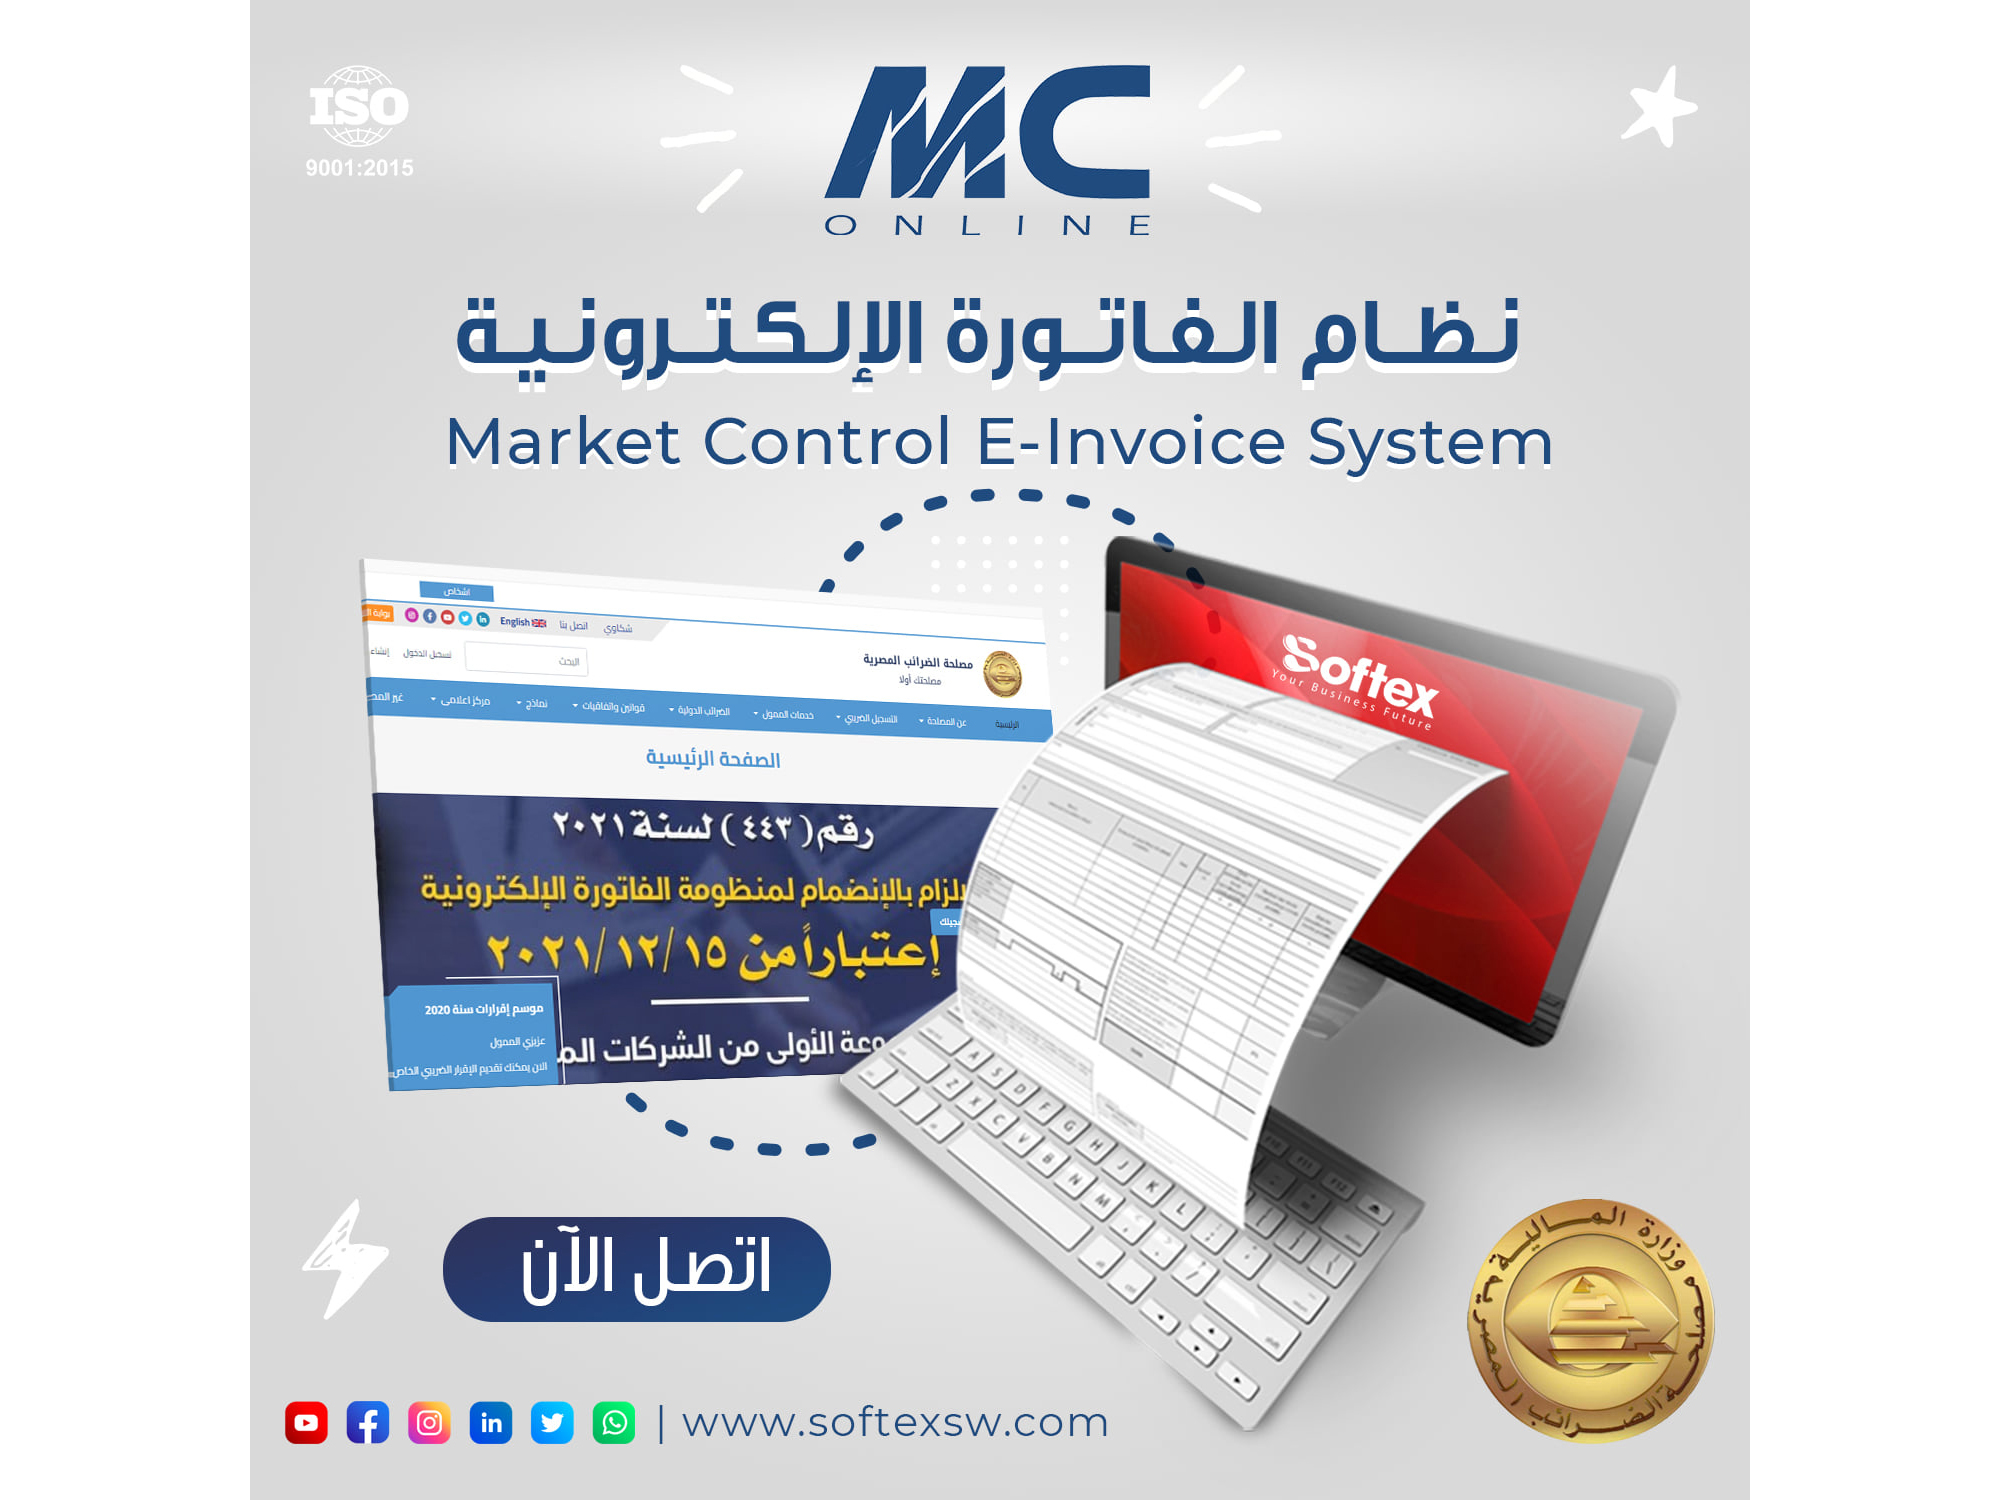 Market Control E-Invoice System Released